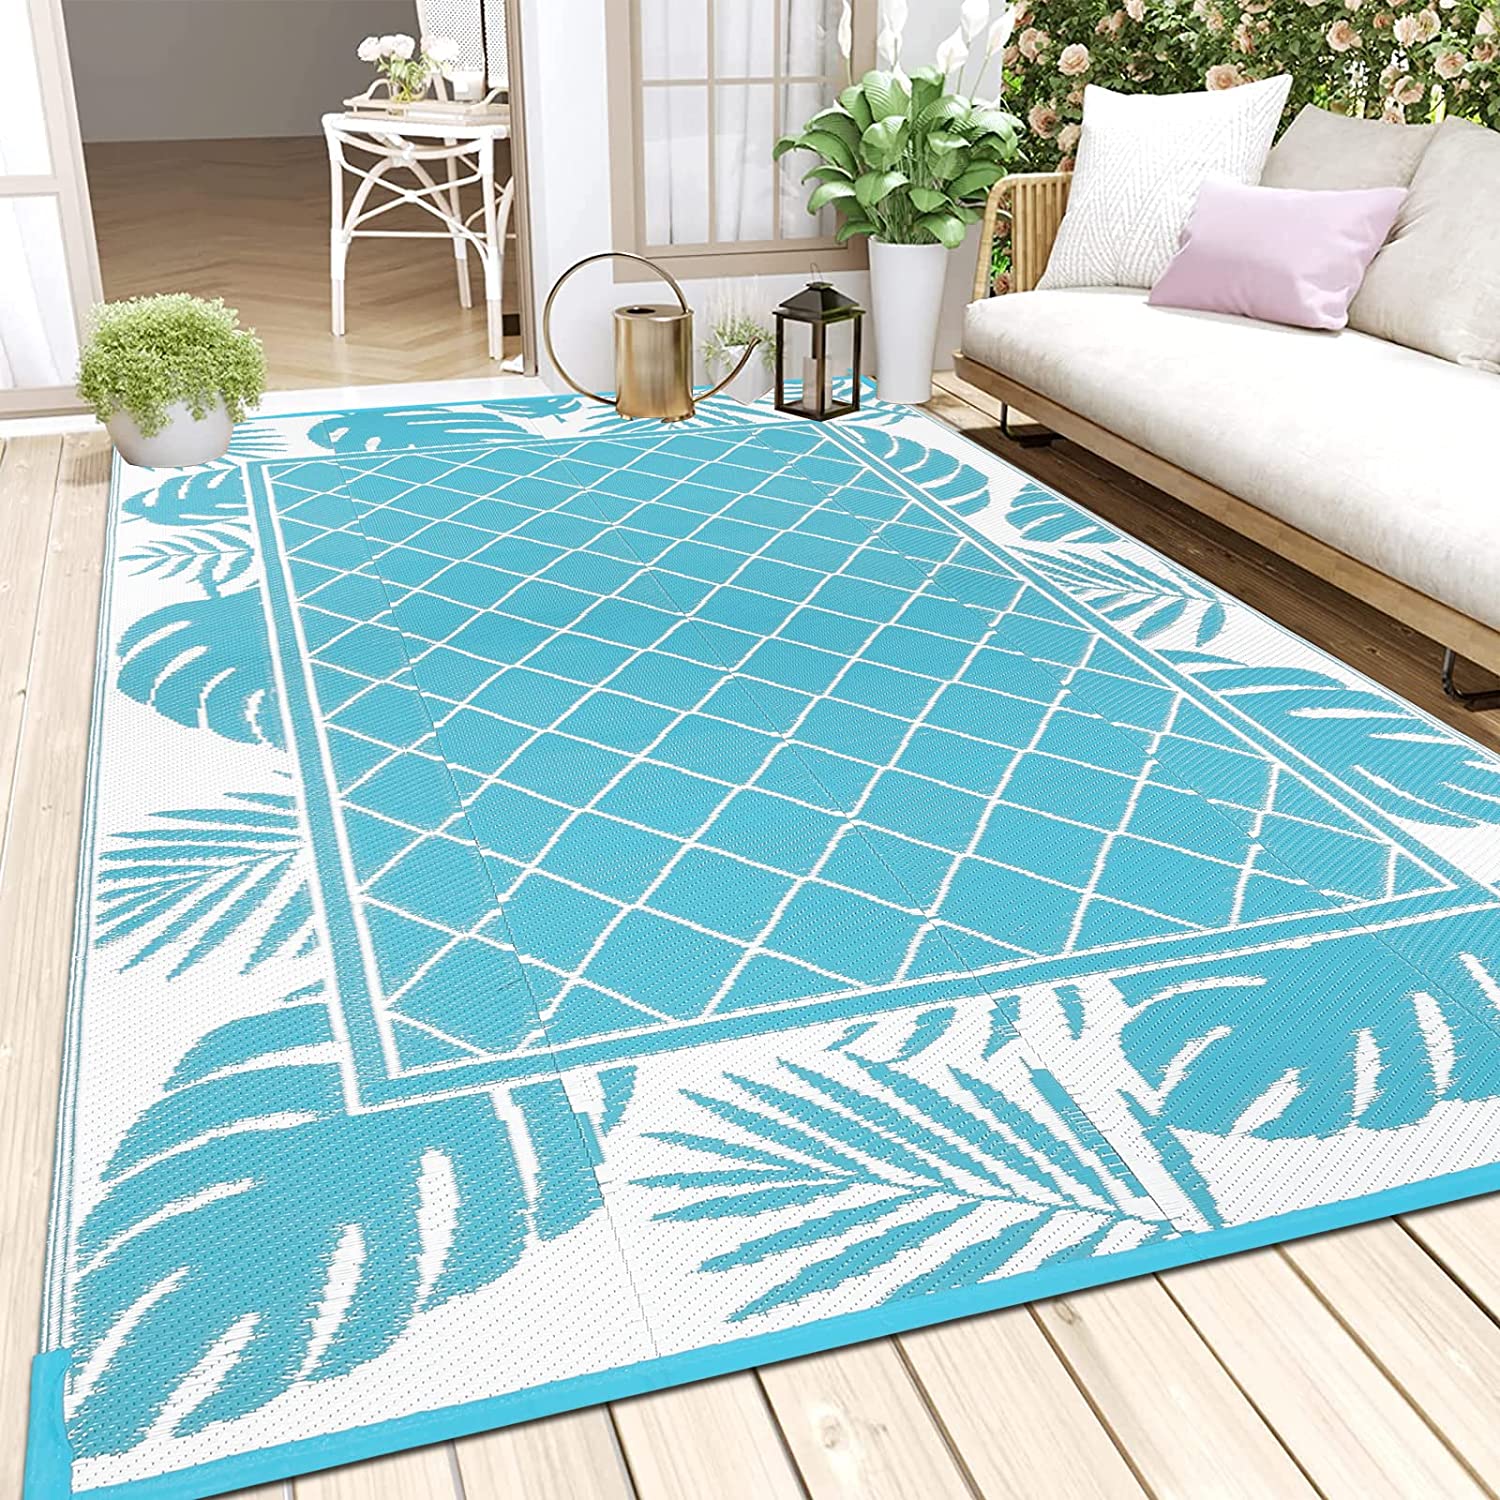 Ileading Outdoor Rug Carpet 5' x7'for Patio Waterproof [...]